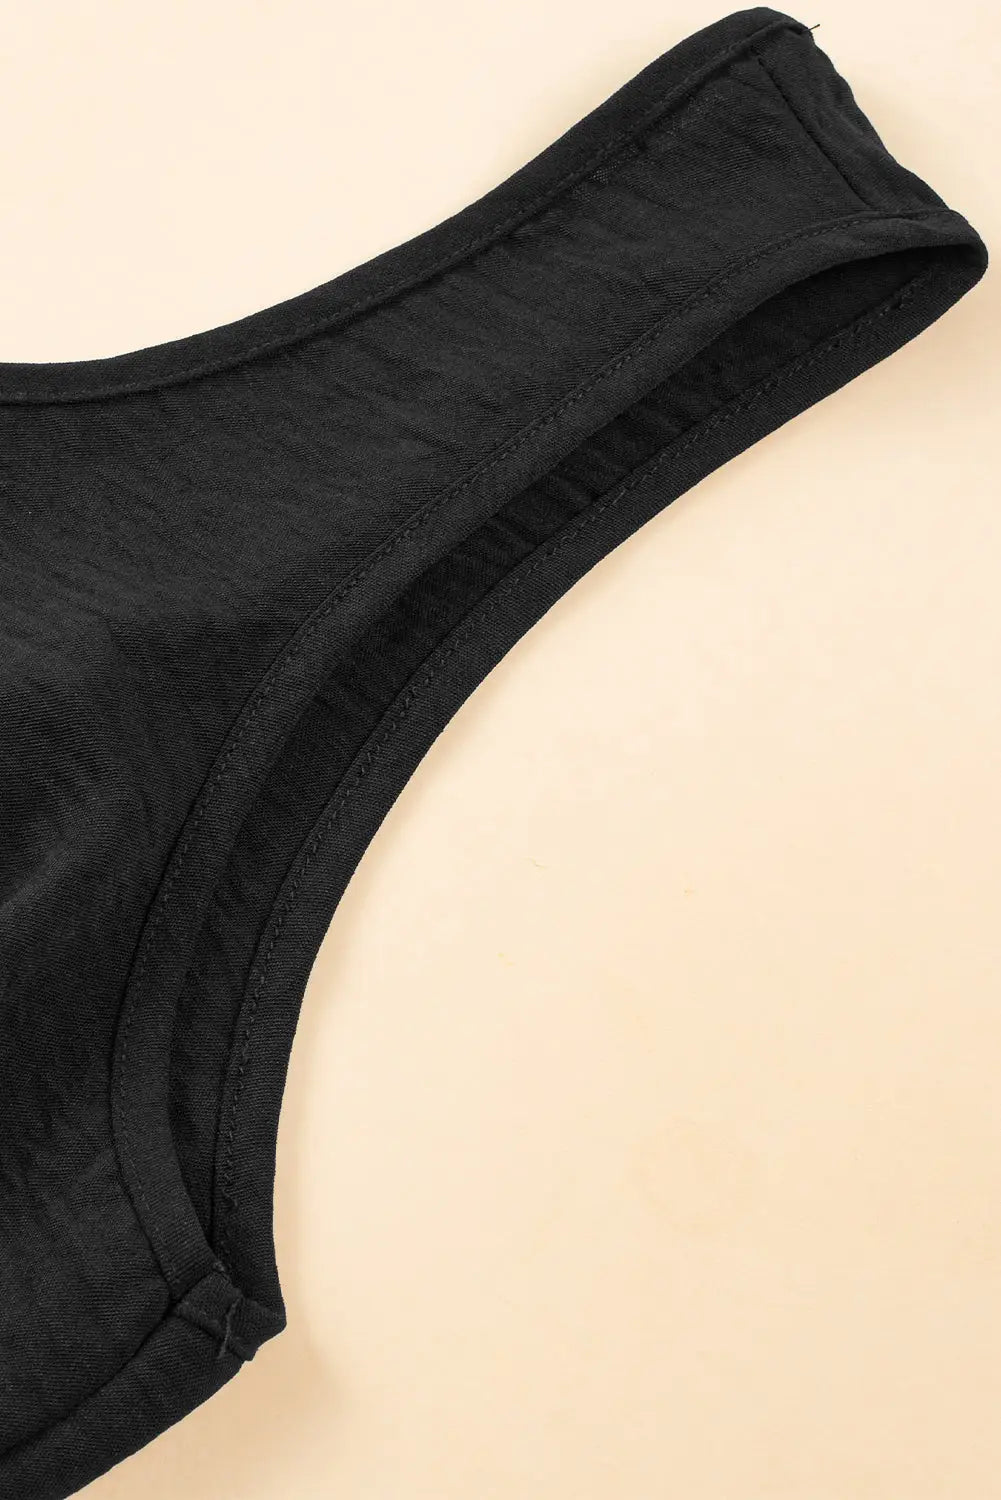 Black backless elastic waist sleeveless romper - bottoms/jumpsuits & rompers